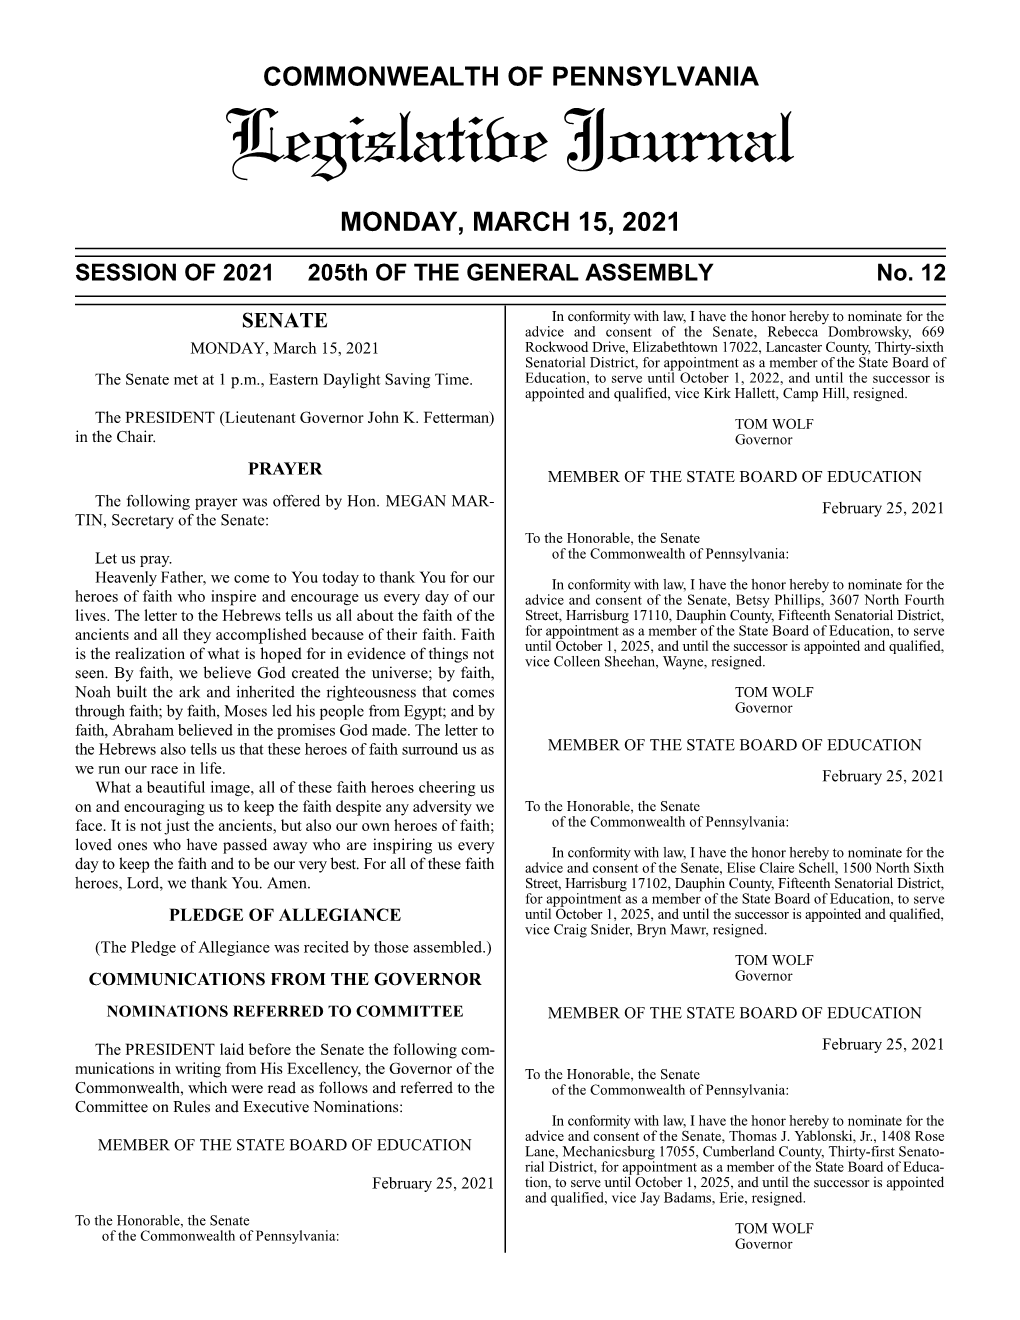 Legislative Journal